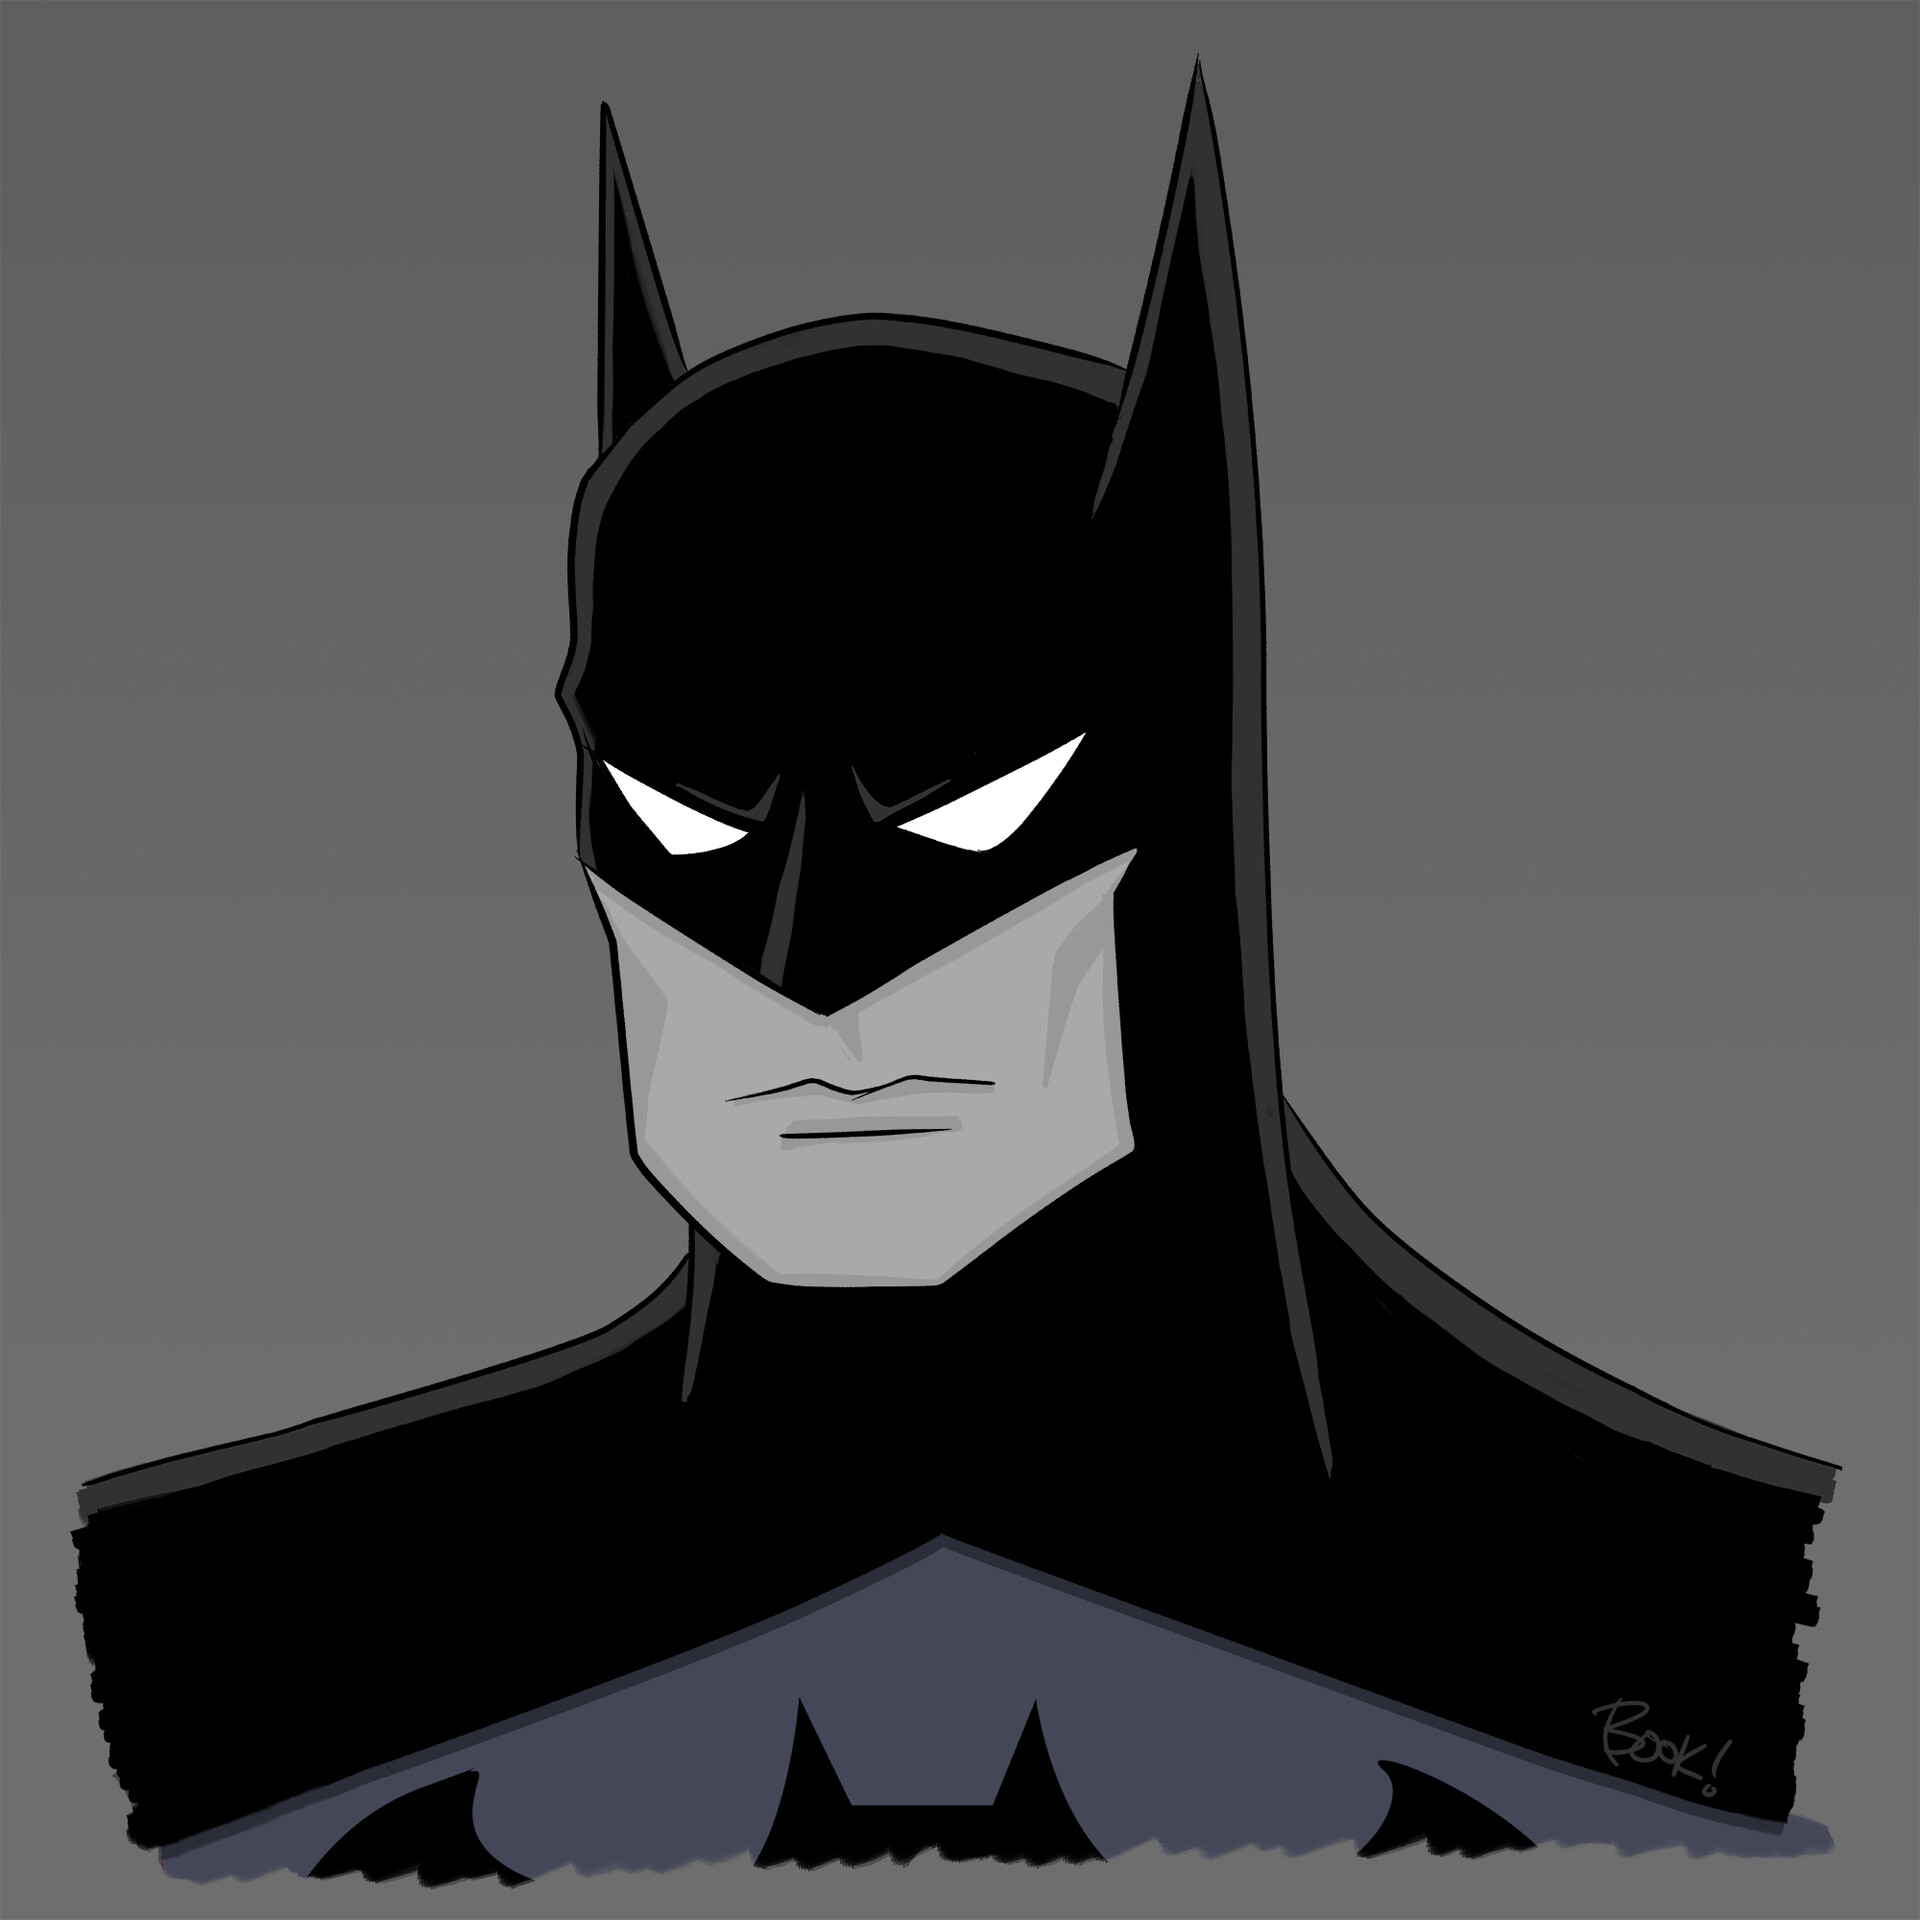 Robert Atkins Art: Daily Sketch - Batman's Cool...